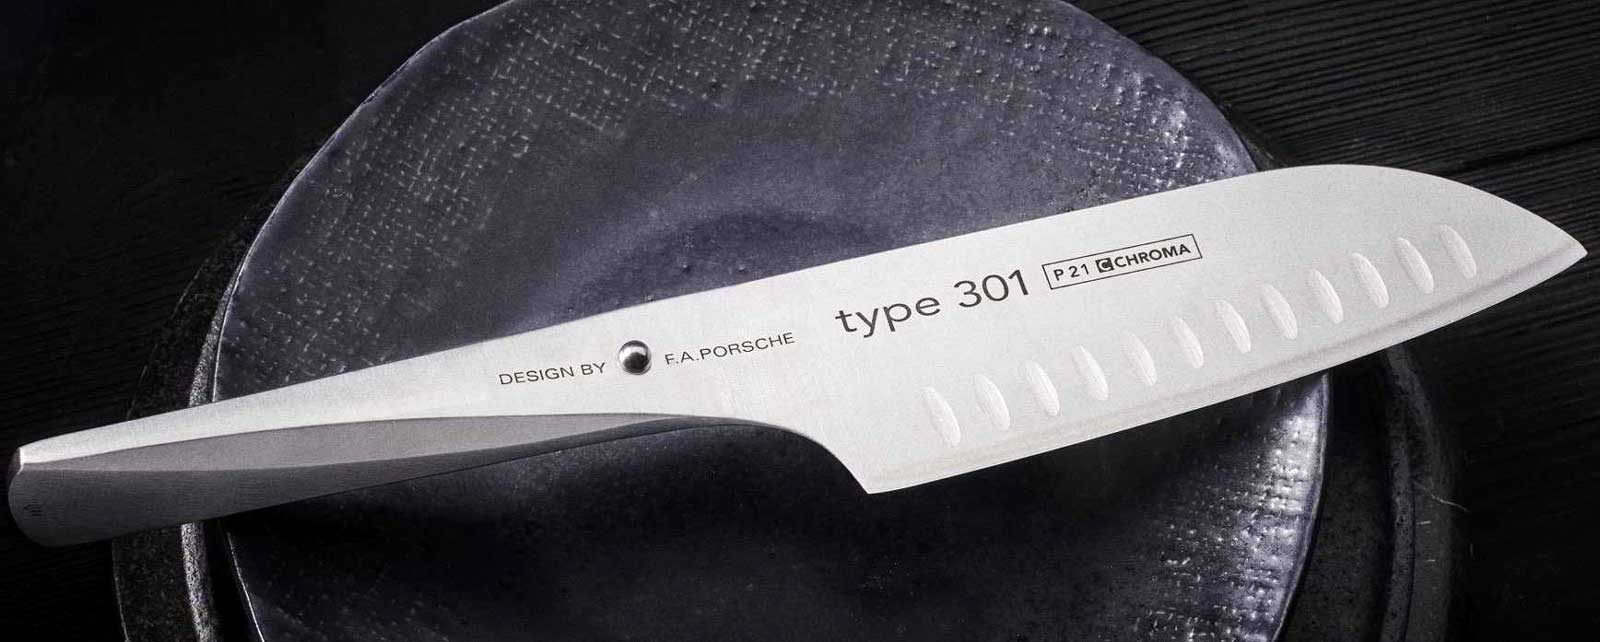 CHROMA typ 301 - Design av FA Porsche - kockkniv Dessa innovativa knivar Typ 301, designade av designforetaget FA Porsche, oppnar ett nytt kapitel i utvecklingen av koksknivar.